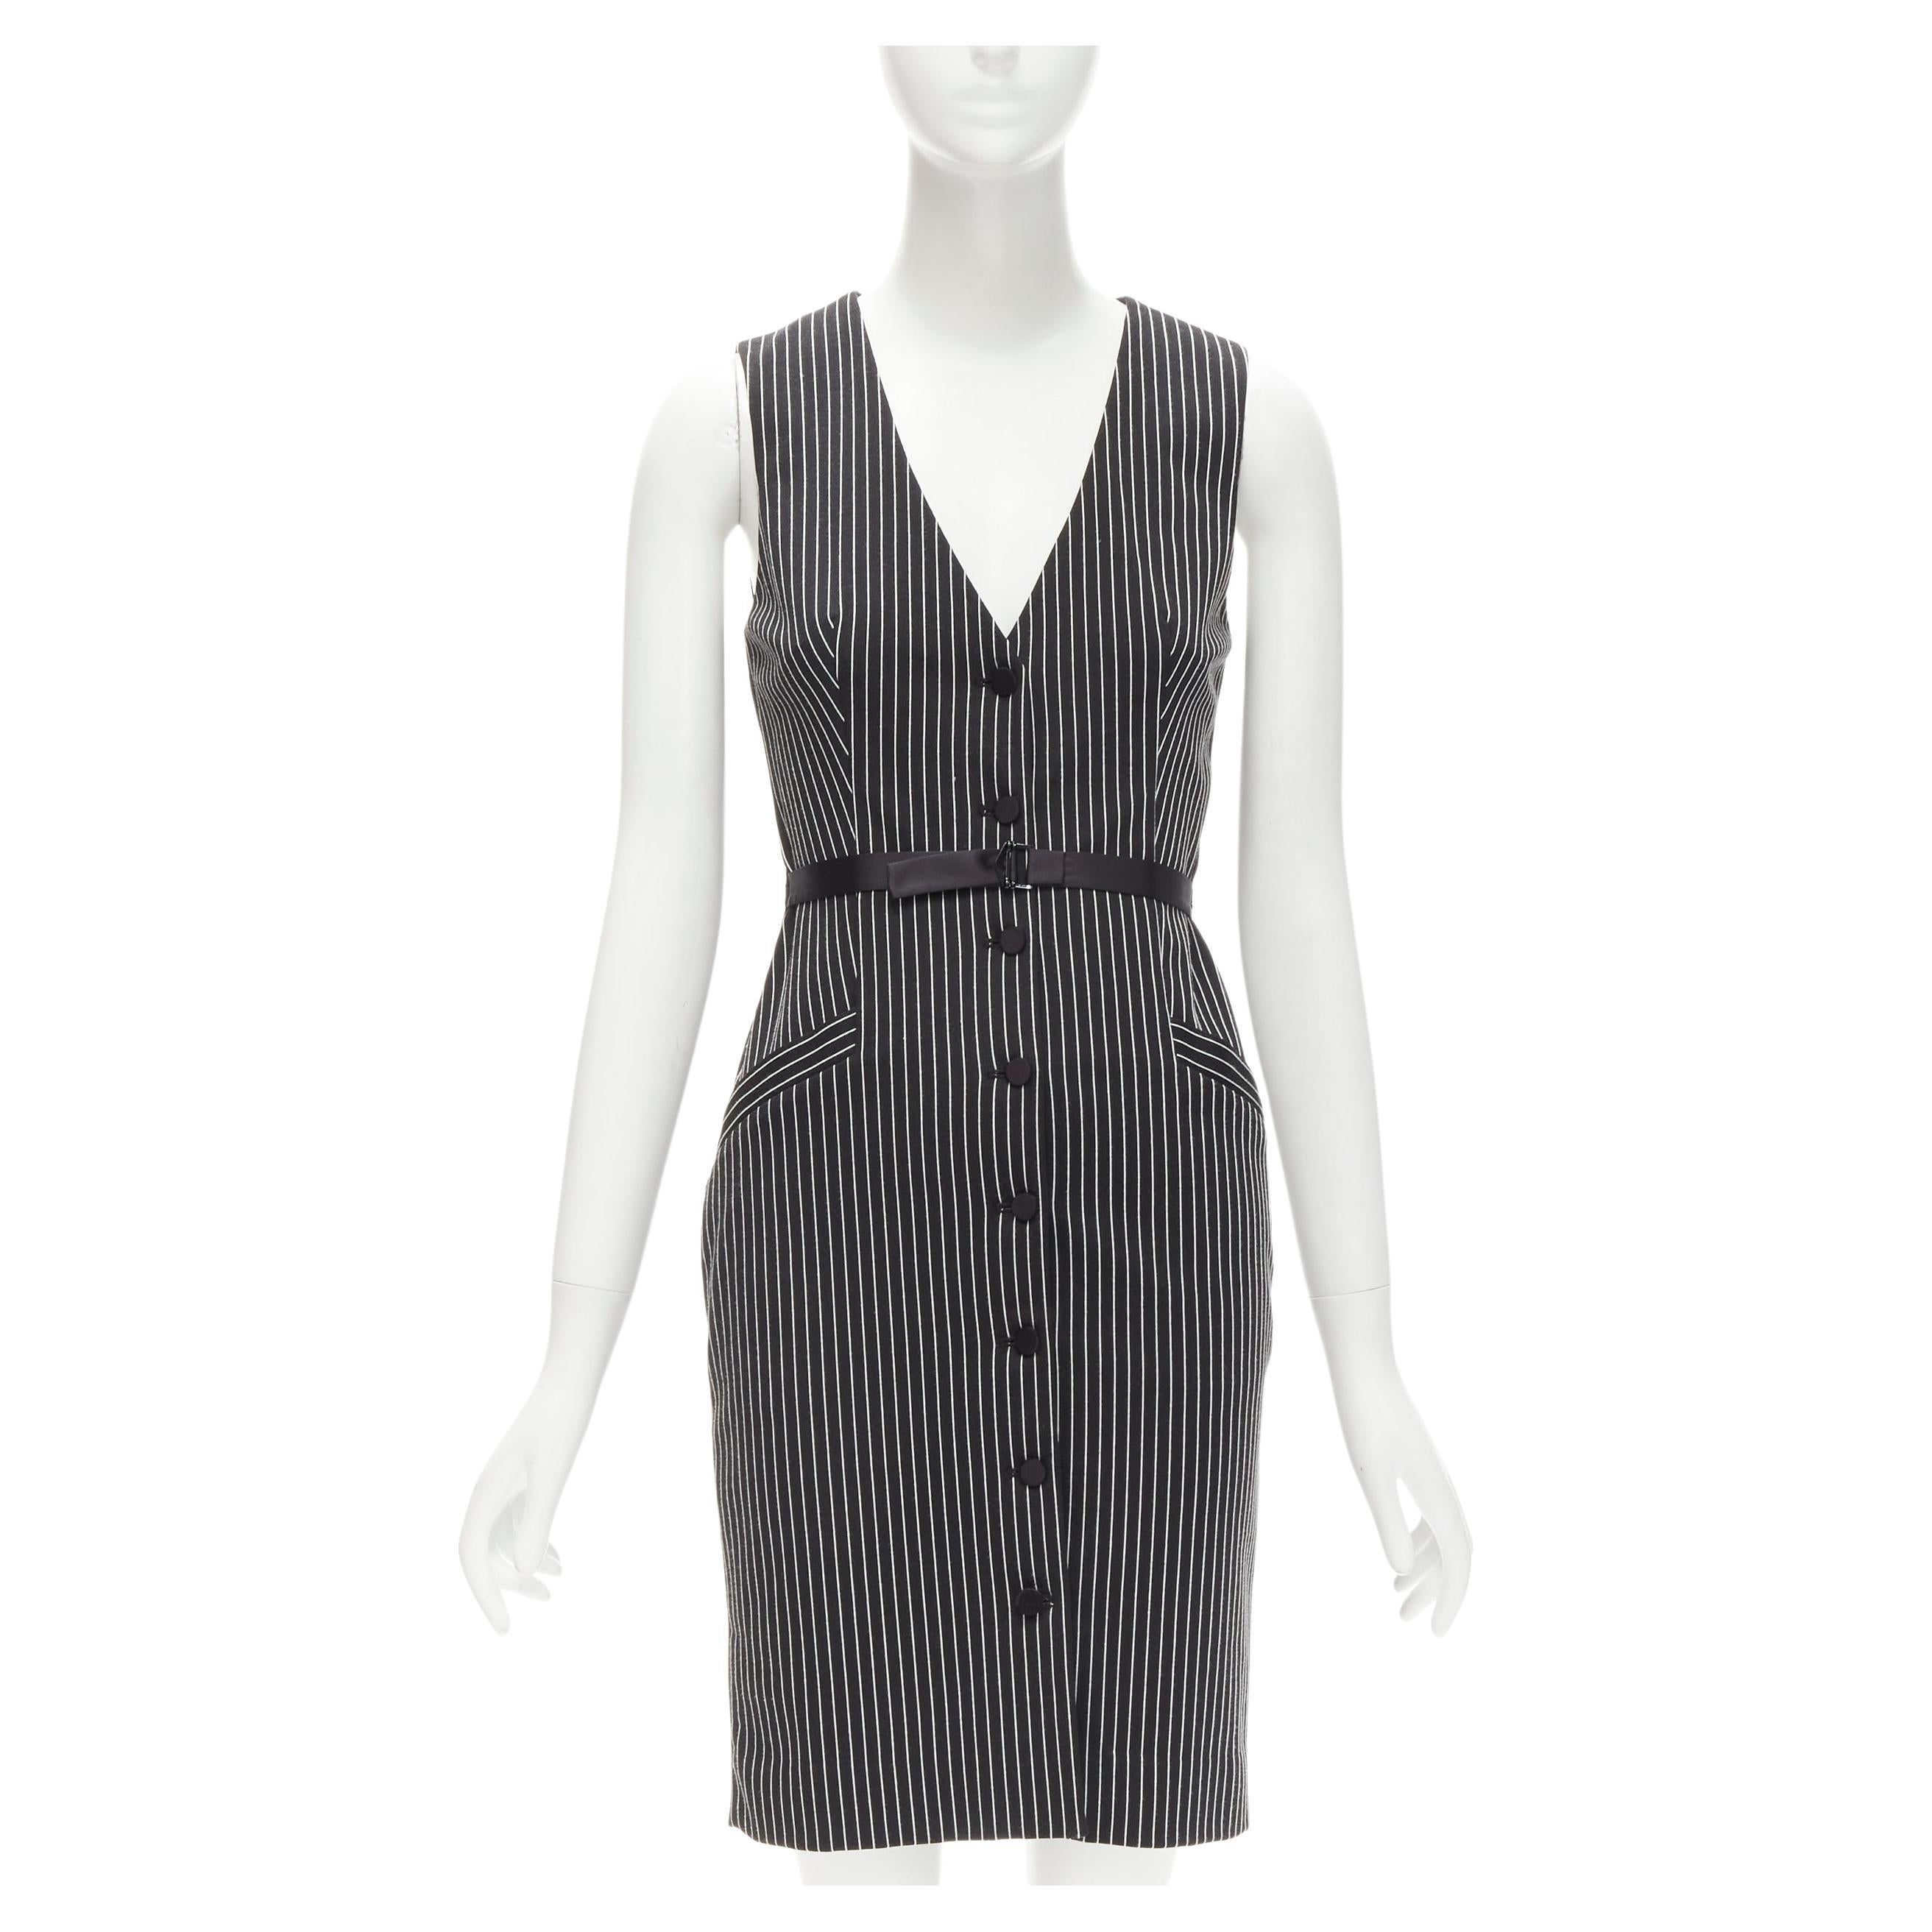 DIANE VON FURSTENBERG Gilet Dress black white vertical pinstripes dress US0 XS For Sale